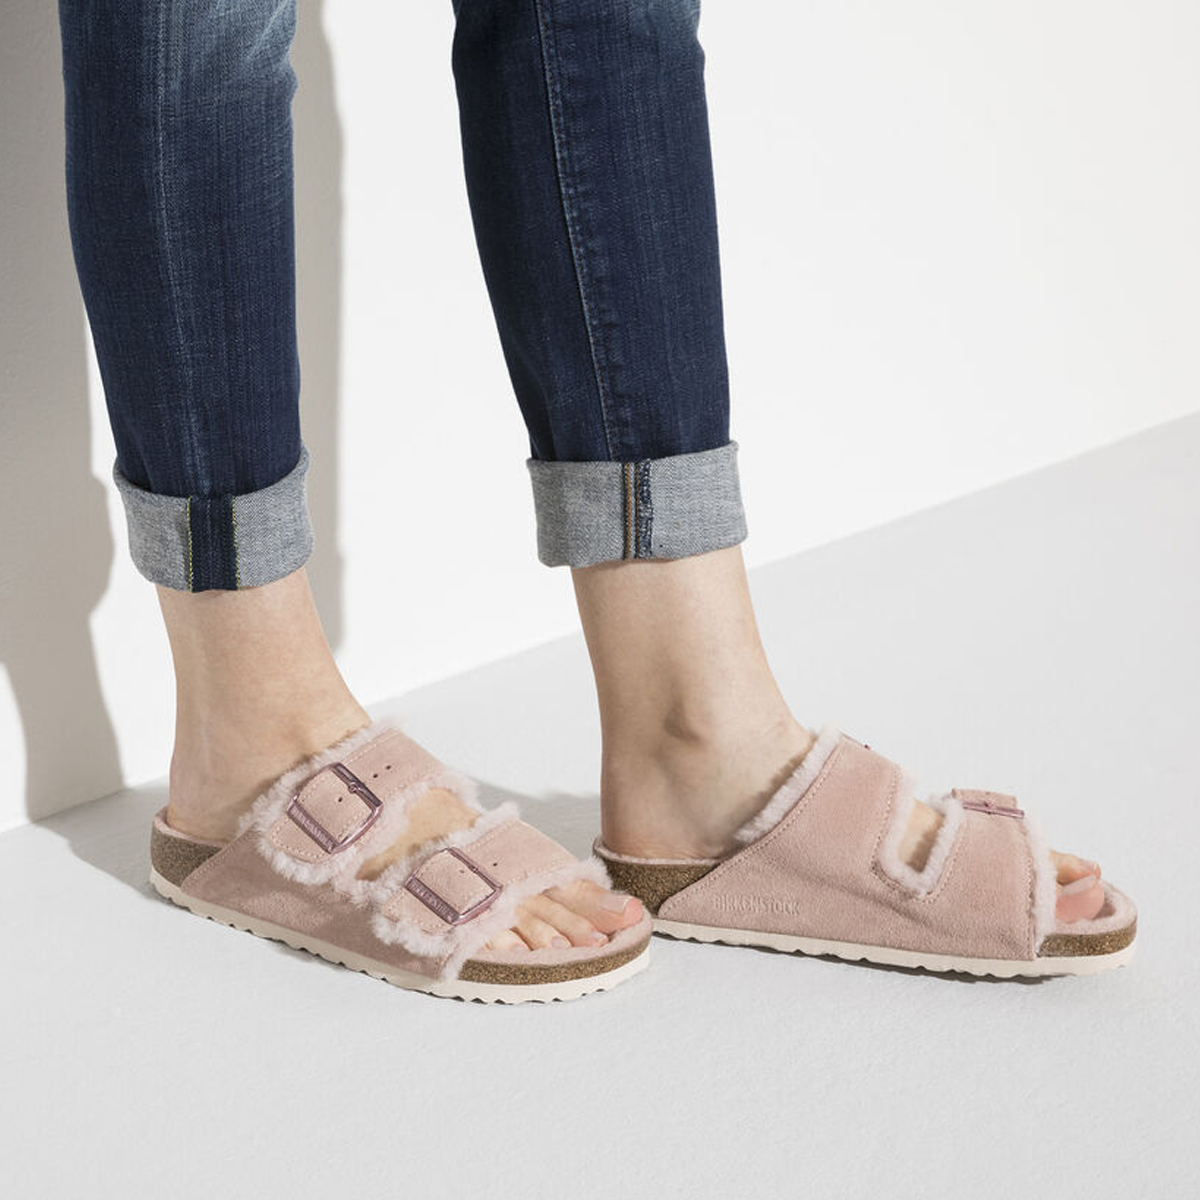 Birkenstock: Which sandals should you buy?